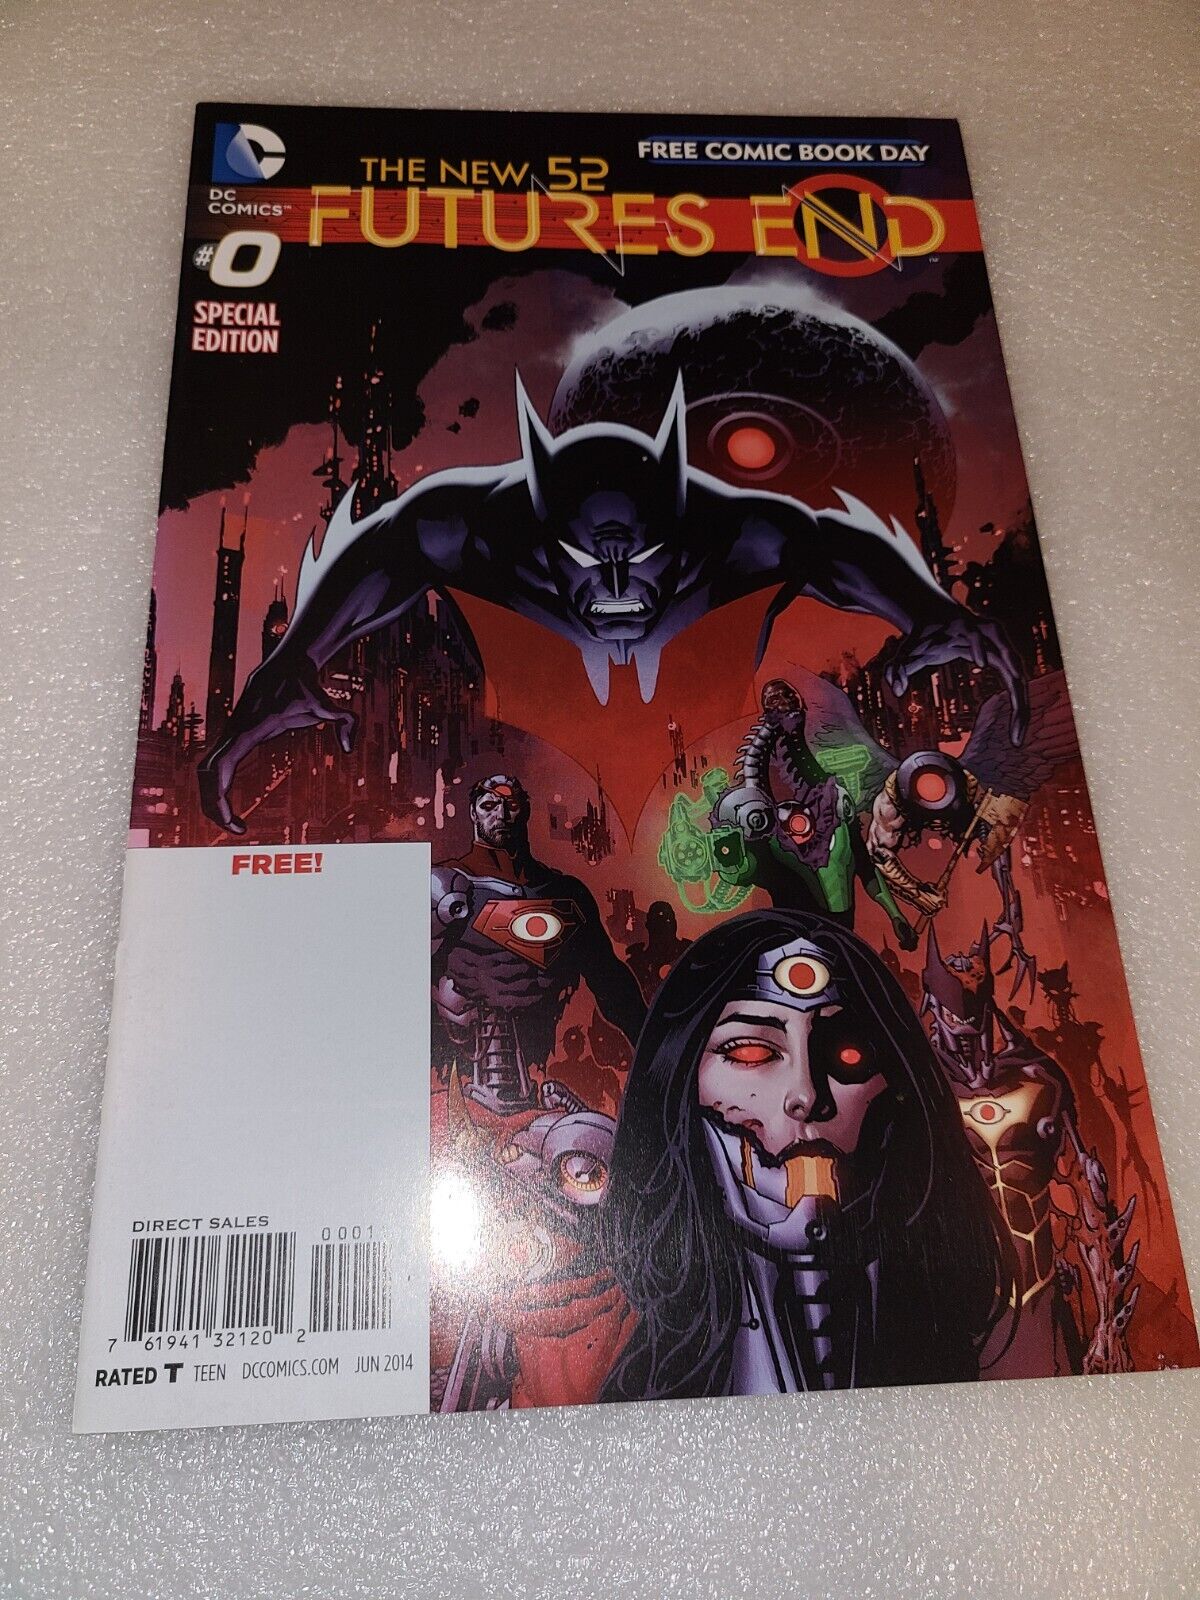 Free Comic Book Day The New 52: Futures End #0 (Vol. 1) 2014 Batman